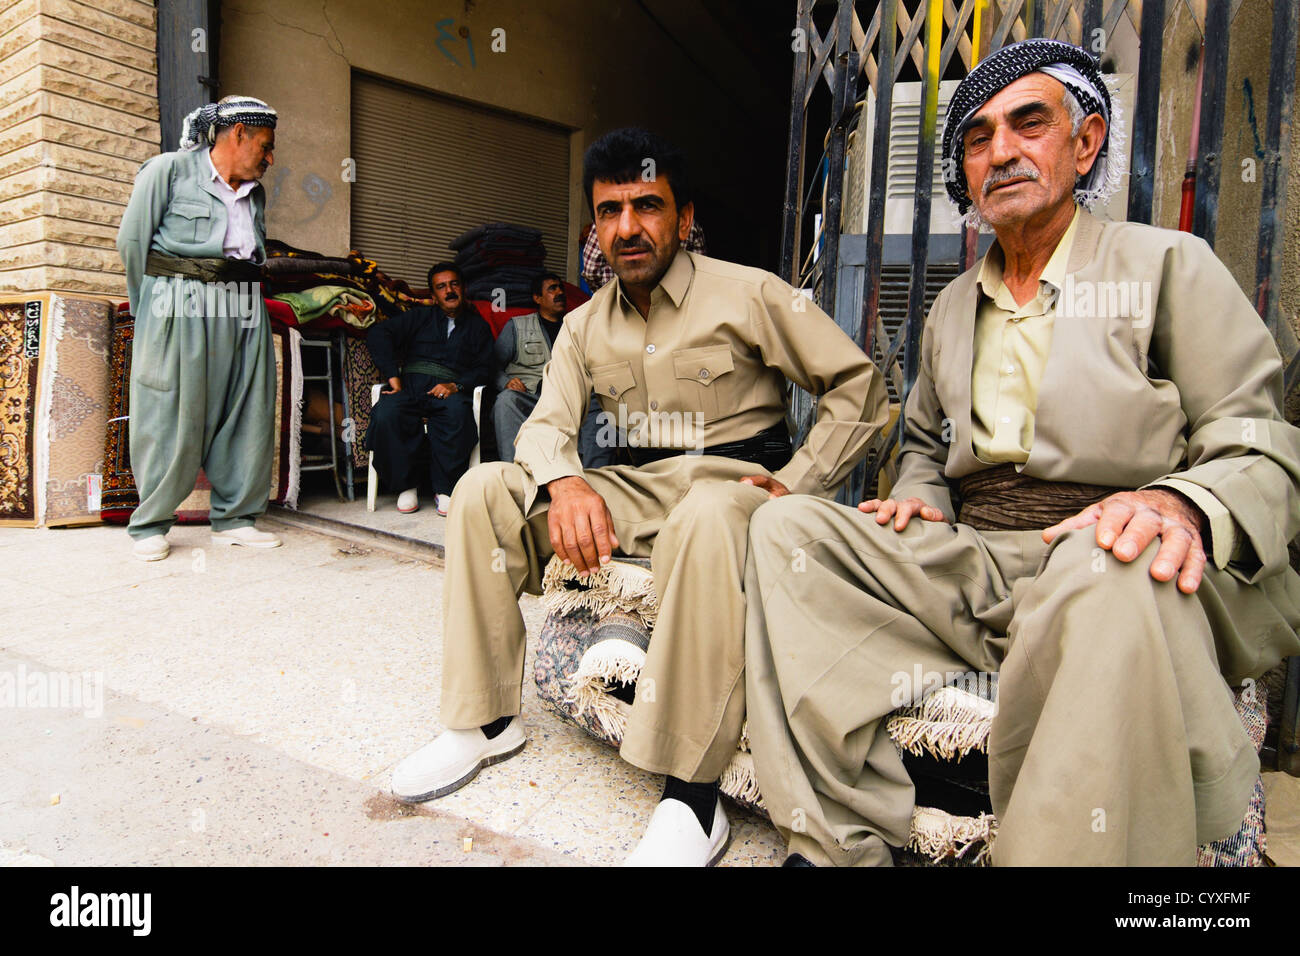 Kurdish men in traditional clothing -Fotos und -Bildmaterial in hoher  Auflösung – Alamy